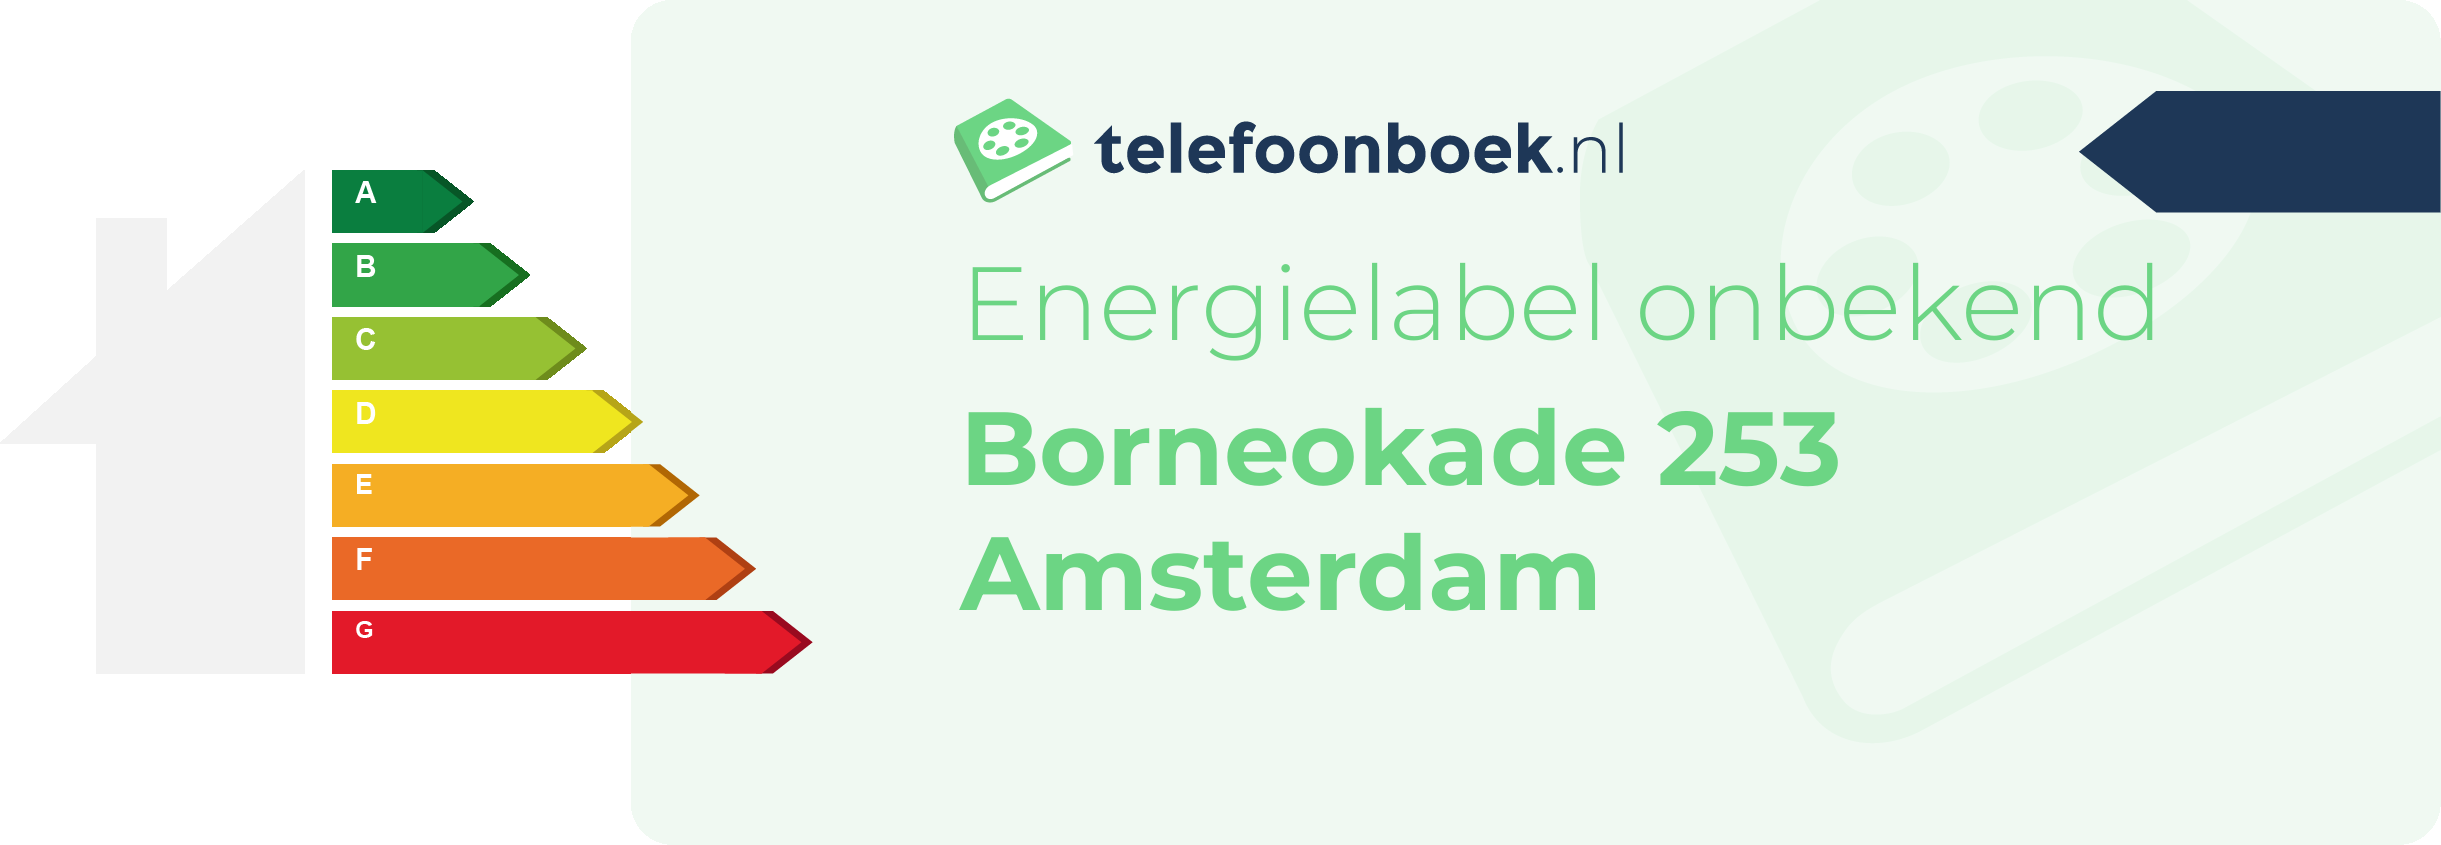 Energielabel Borneokade 253 Amsterdam